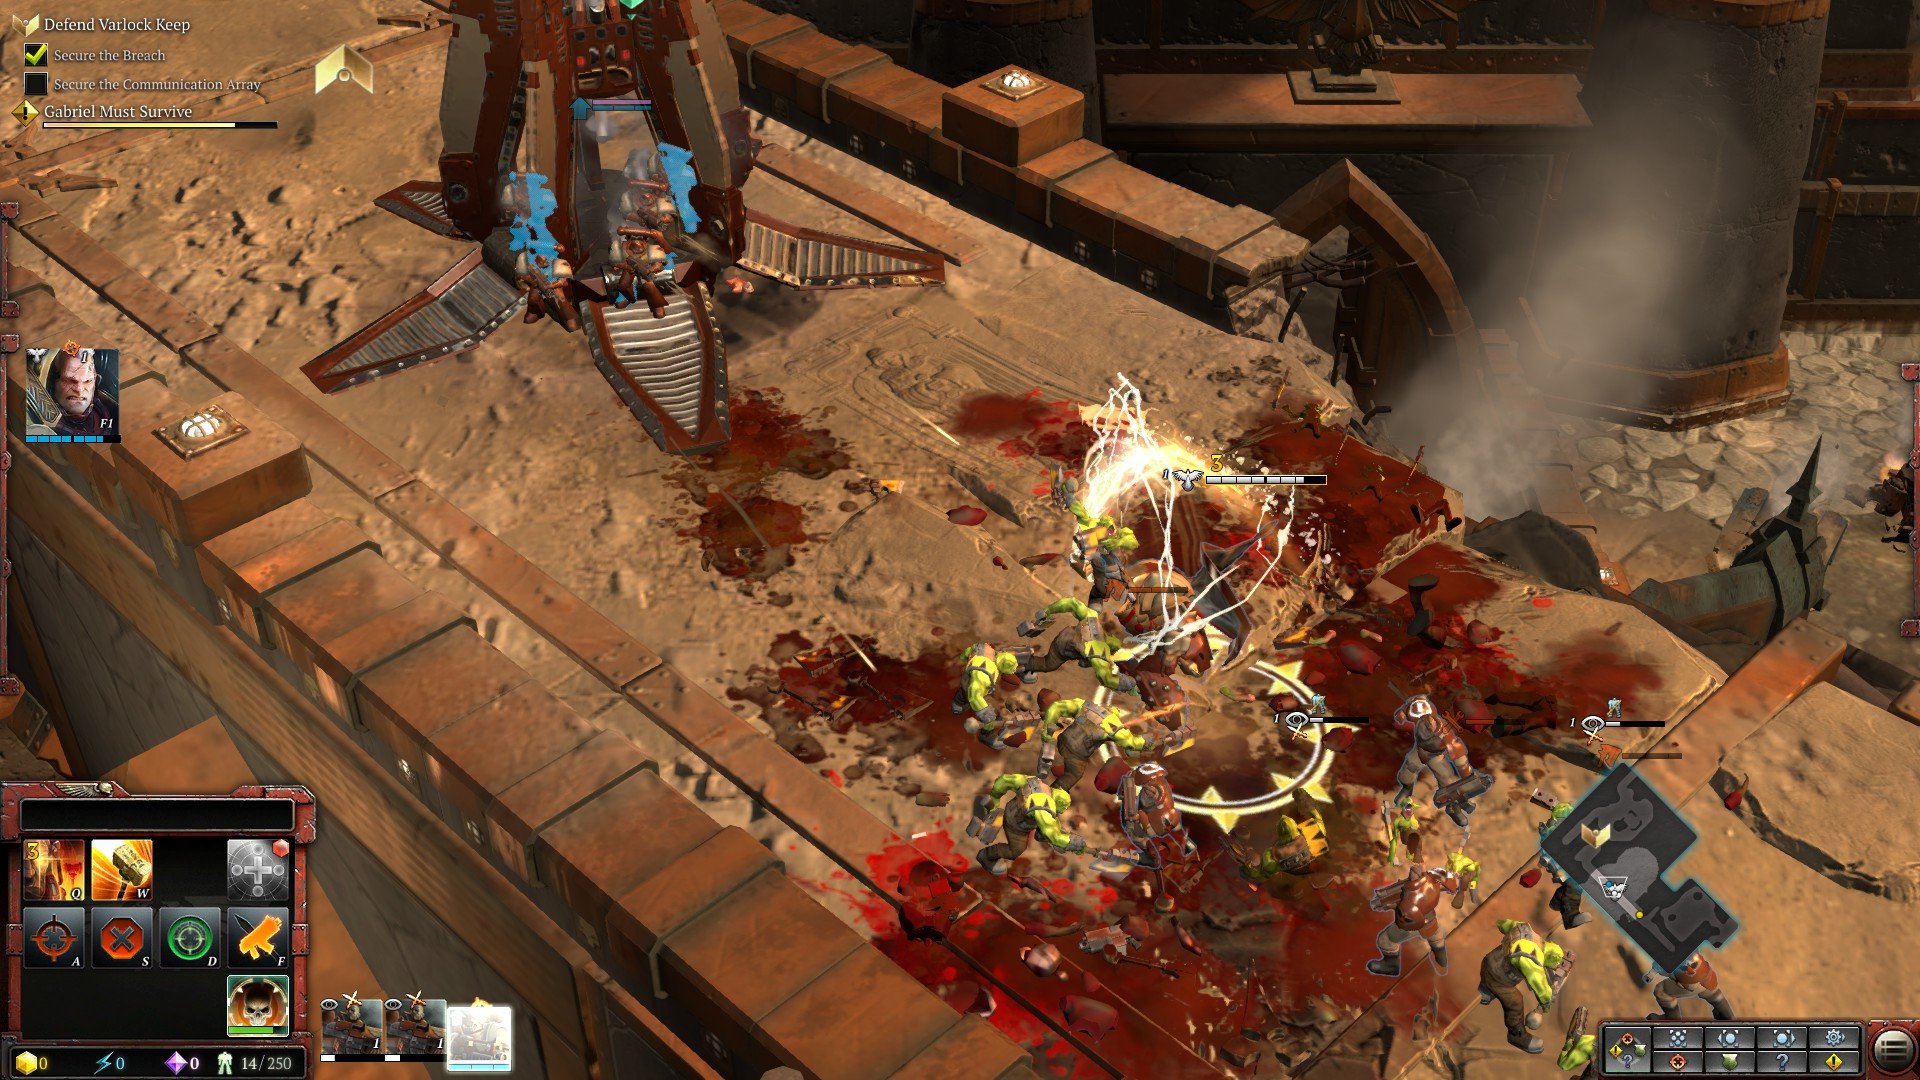 Warhammer 40,000: Dawn of War III Steam low settings